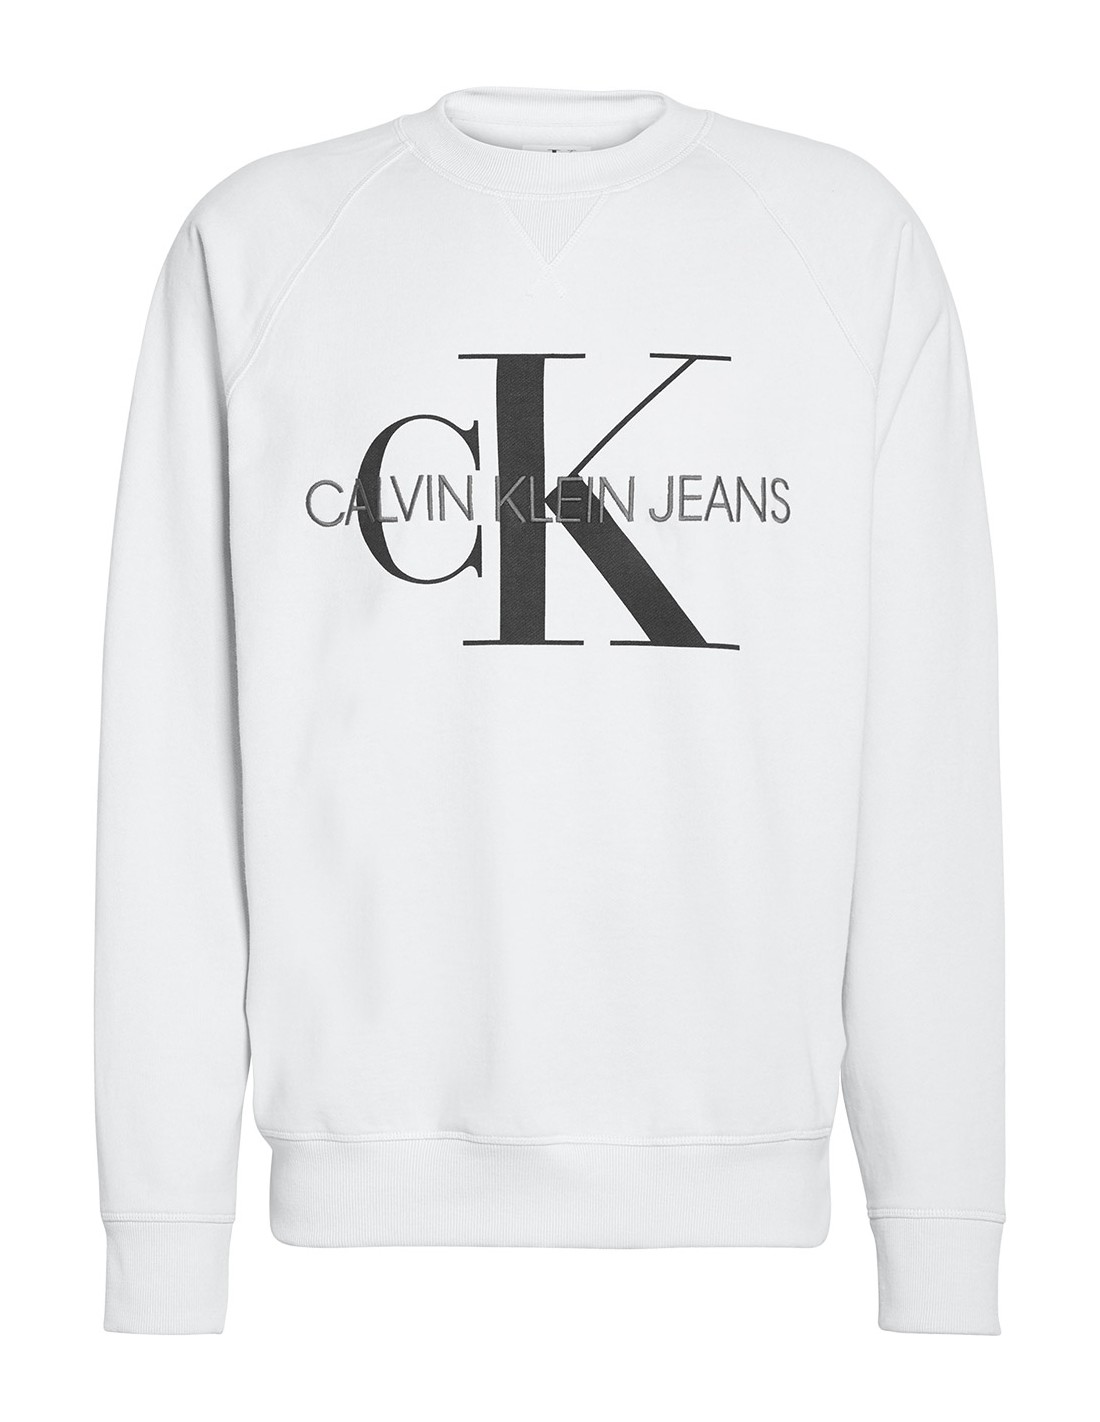 CALVIN KLEIN Jeans - Sweatshirt | Lange Ketten